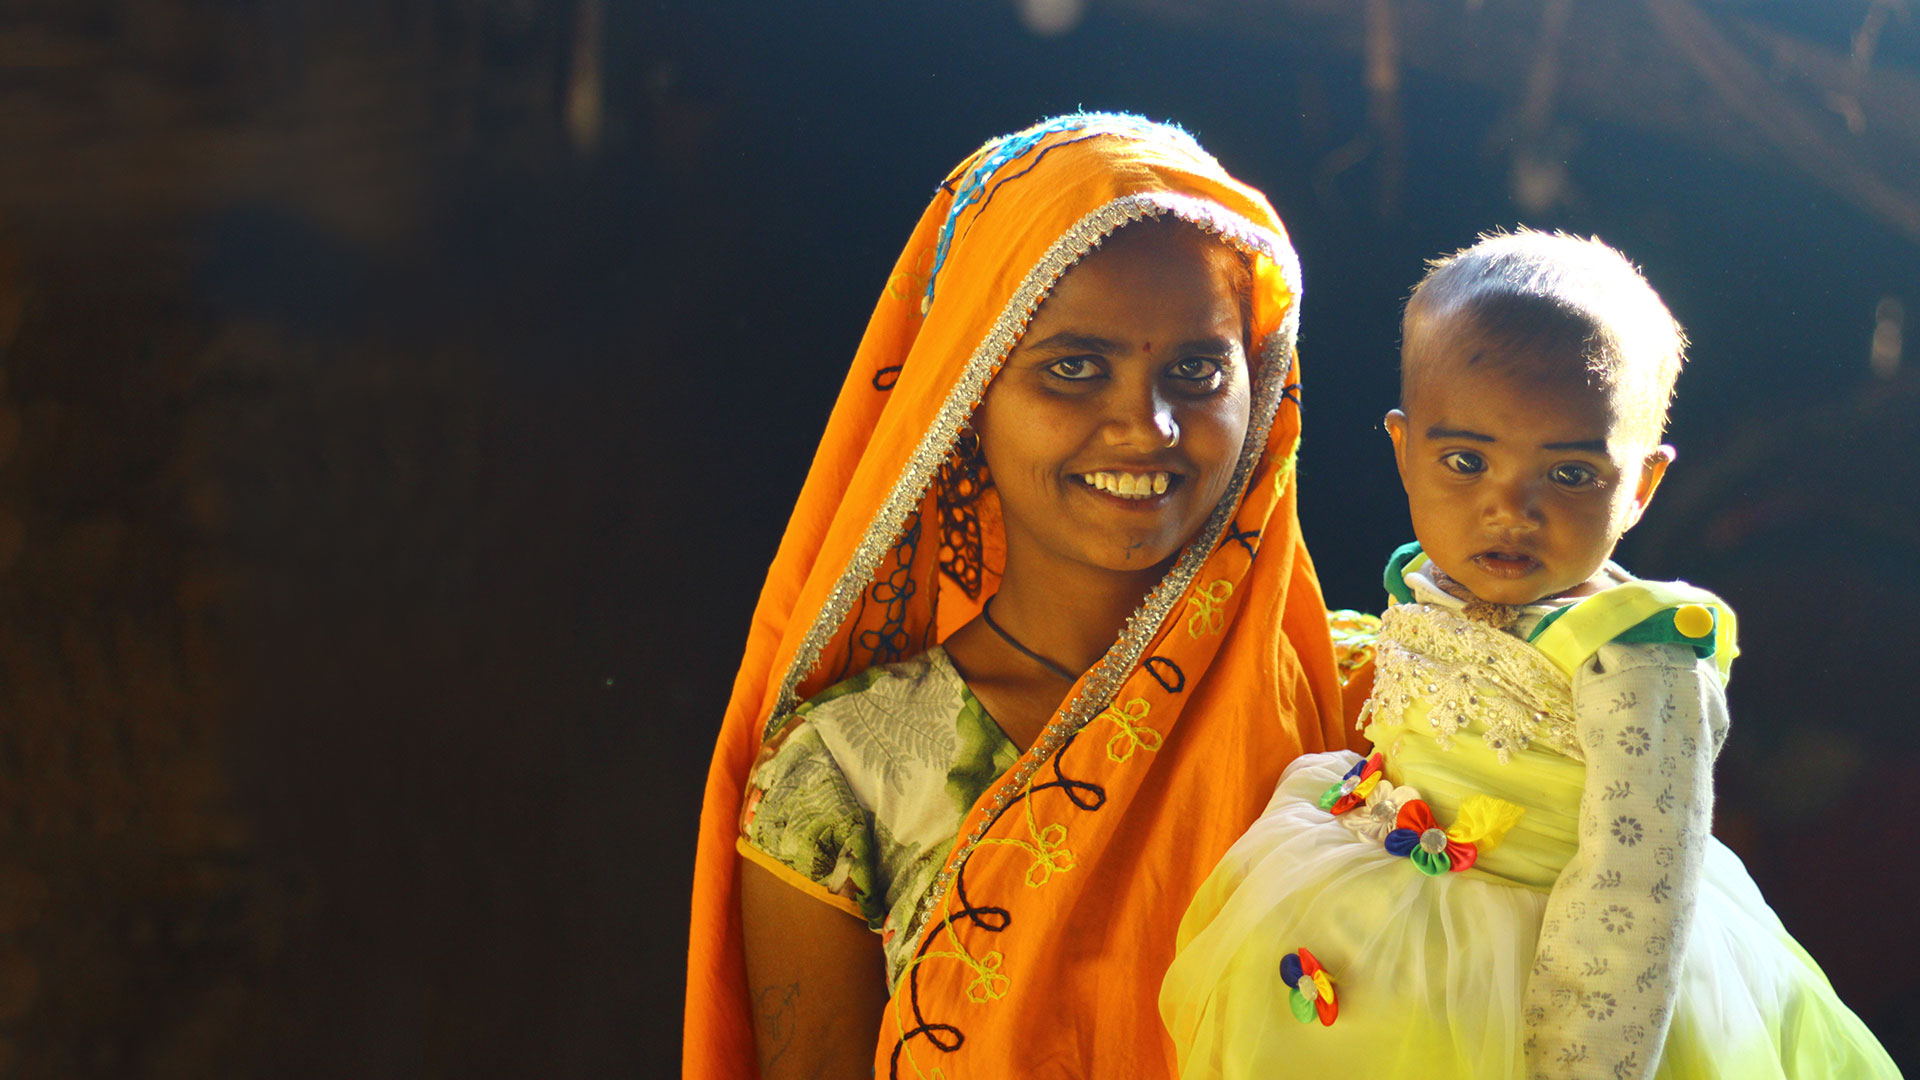 Rajasthan tribal women and children